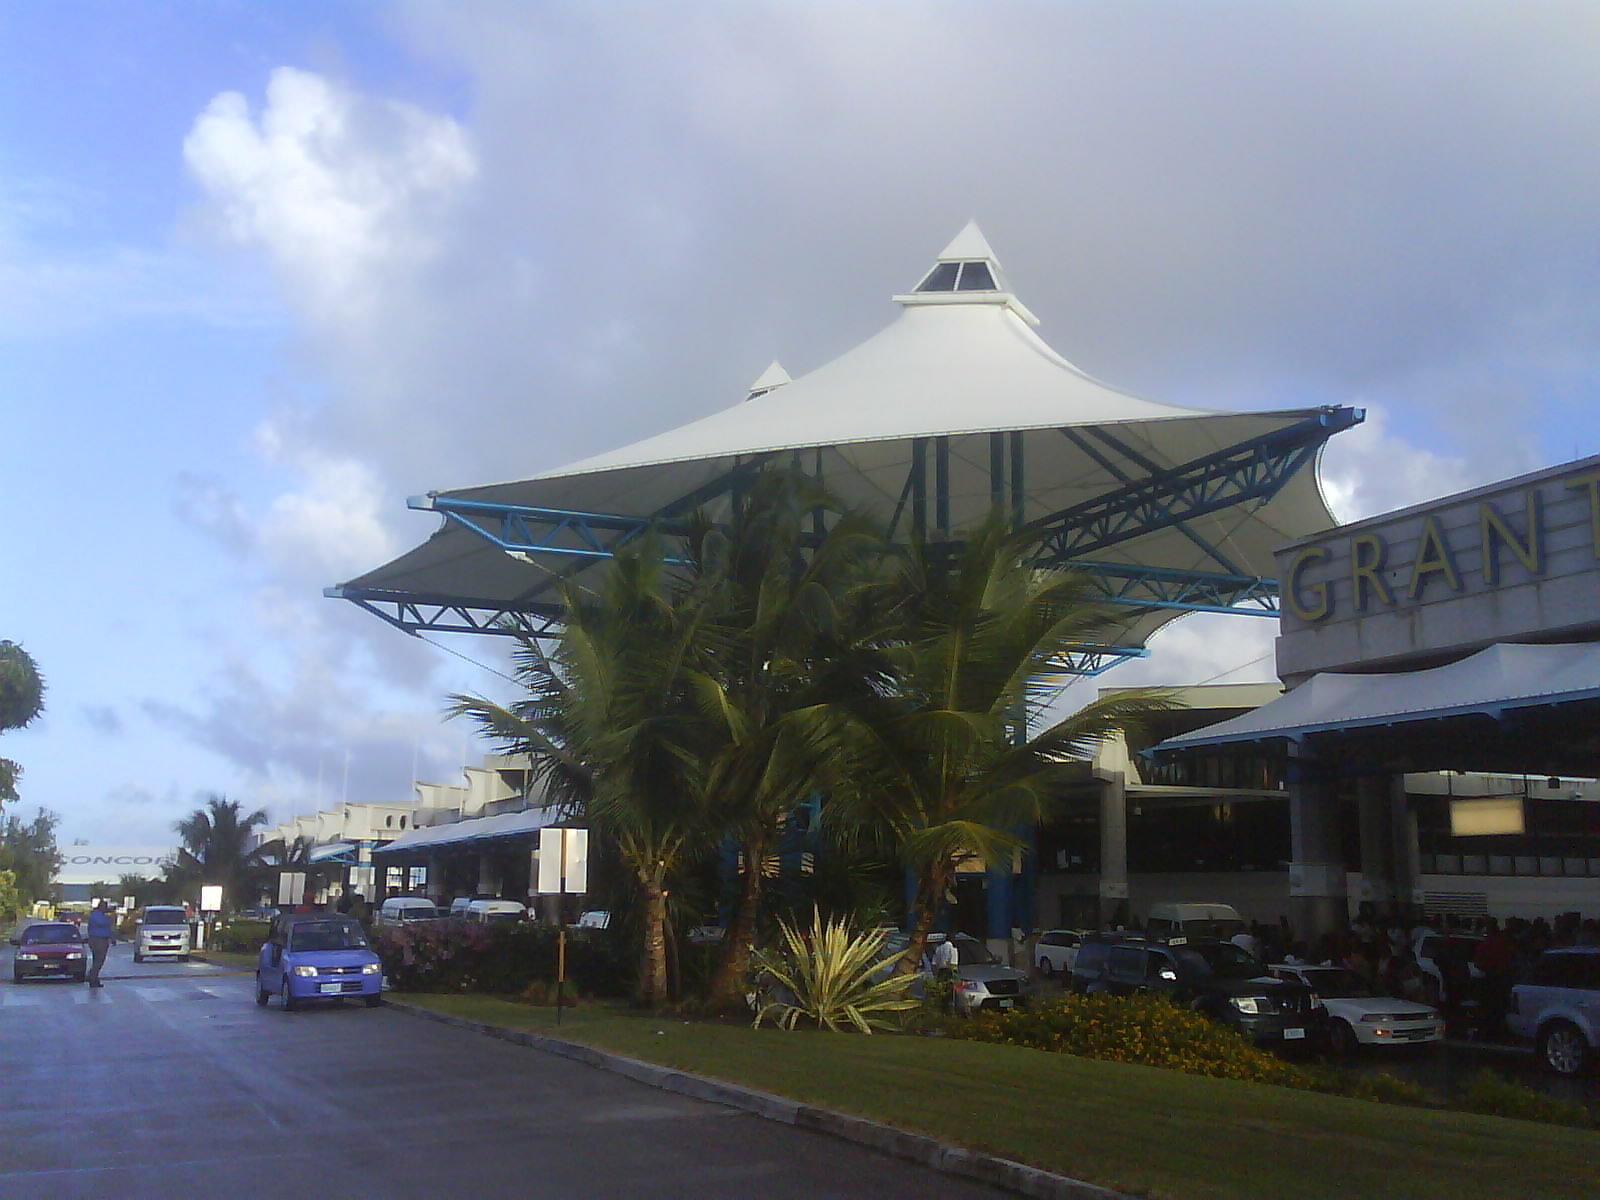 Bridgetown Airport has two passenger terminals.